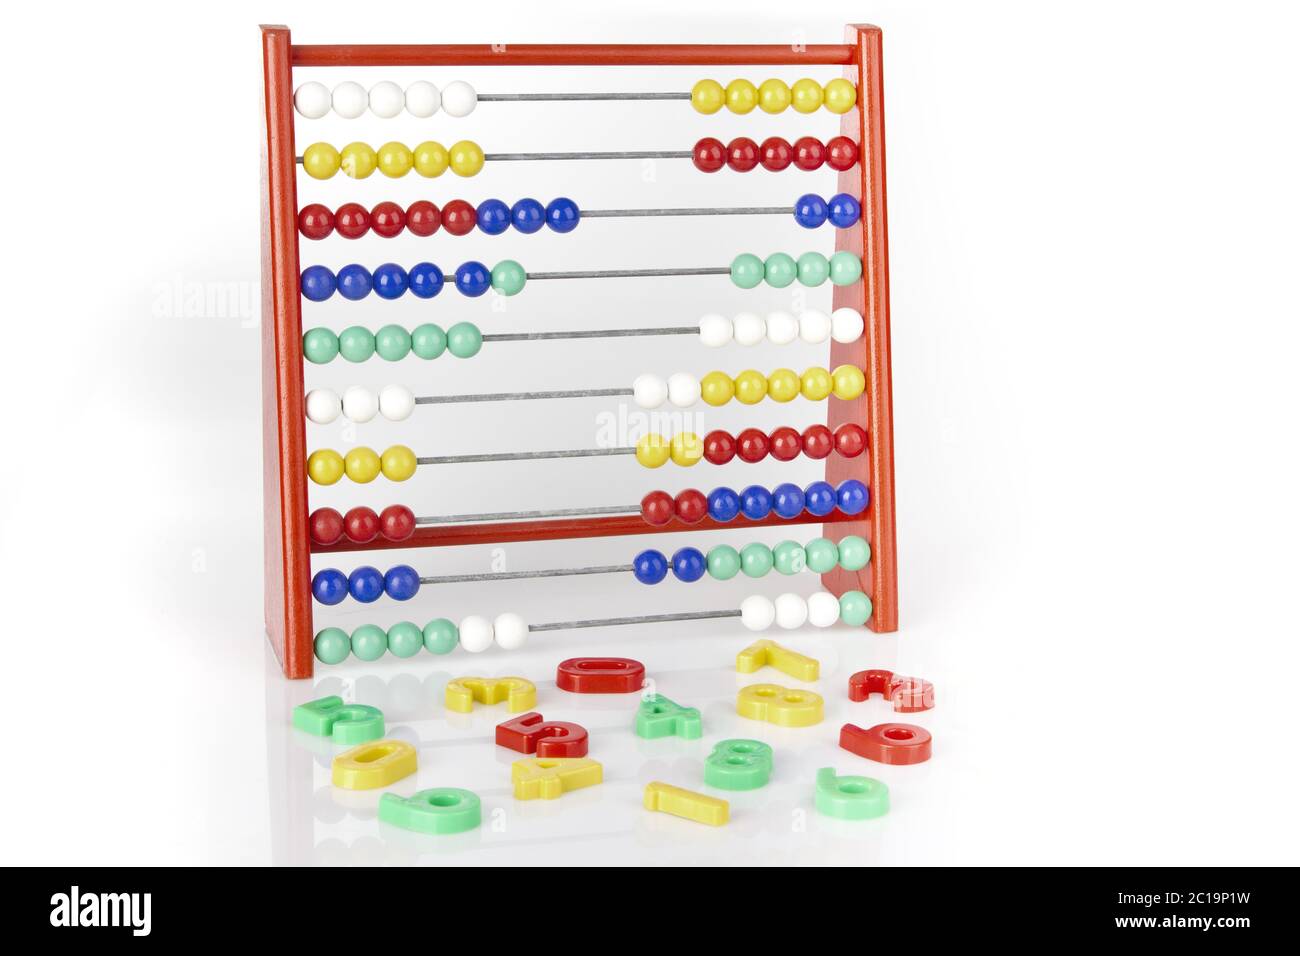 abacus with numerics Stock Photo